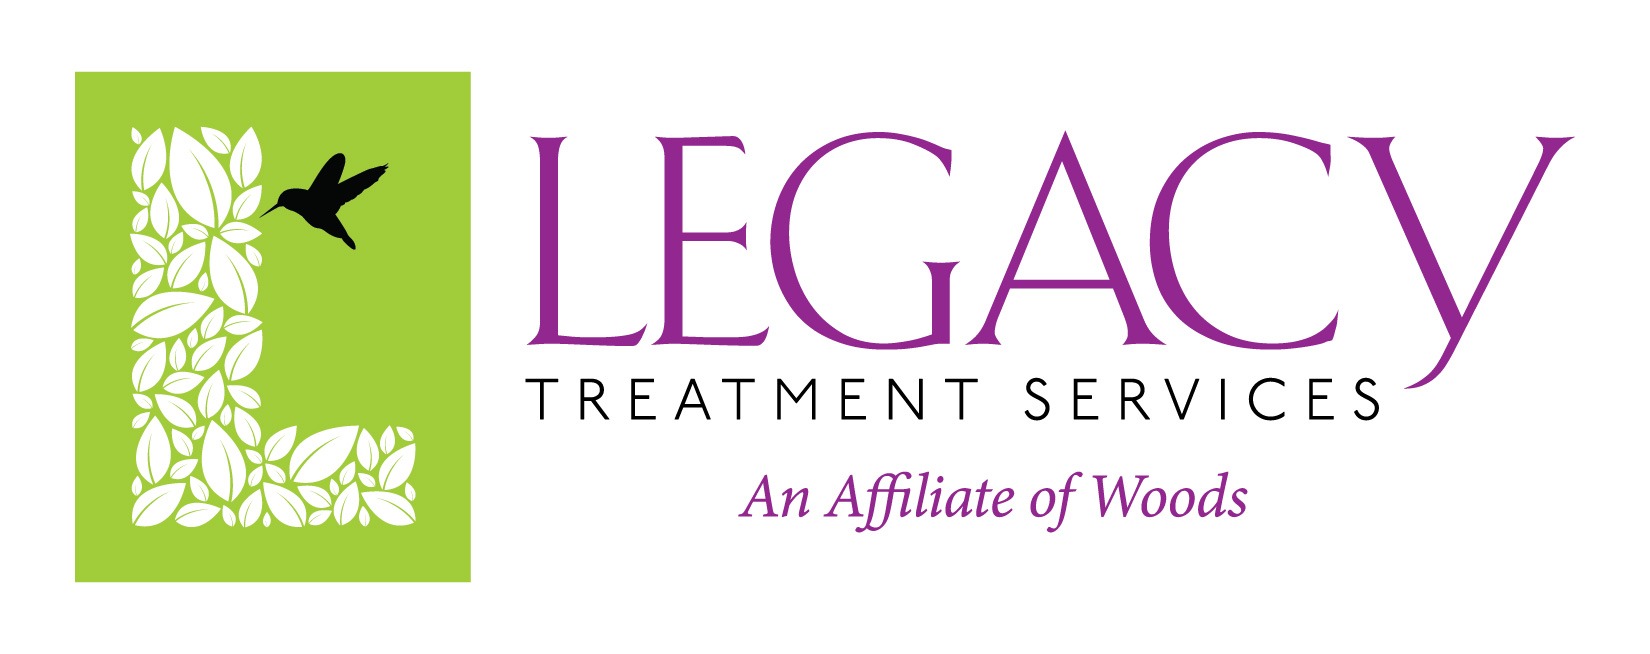 legacy treatment services logo